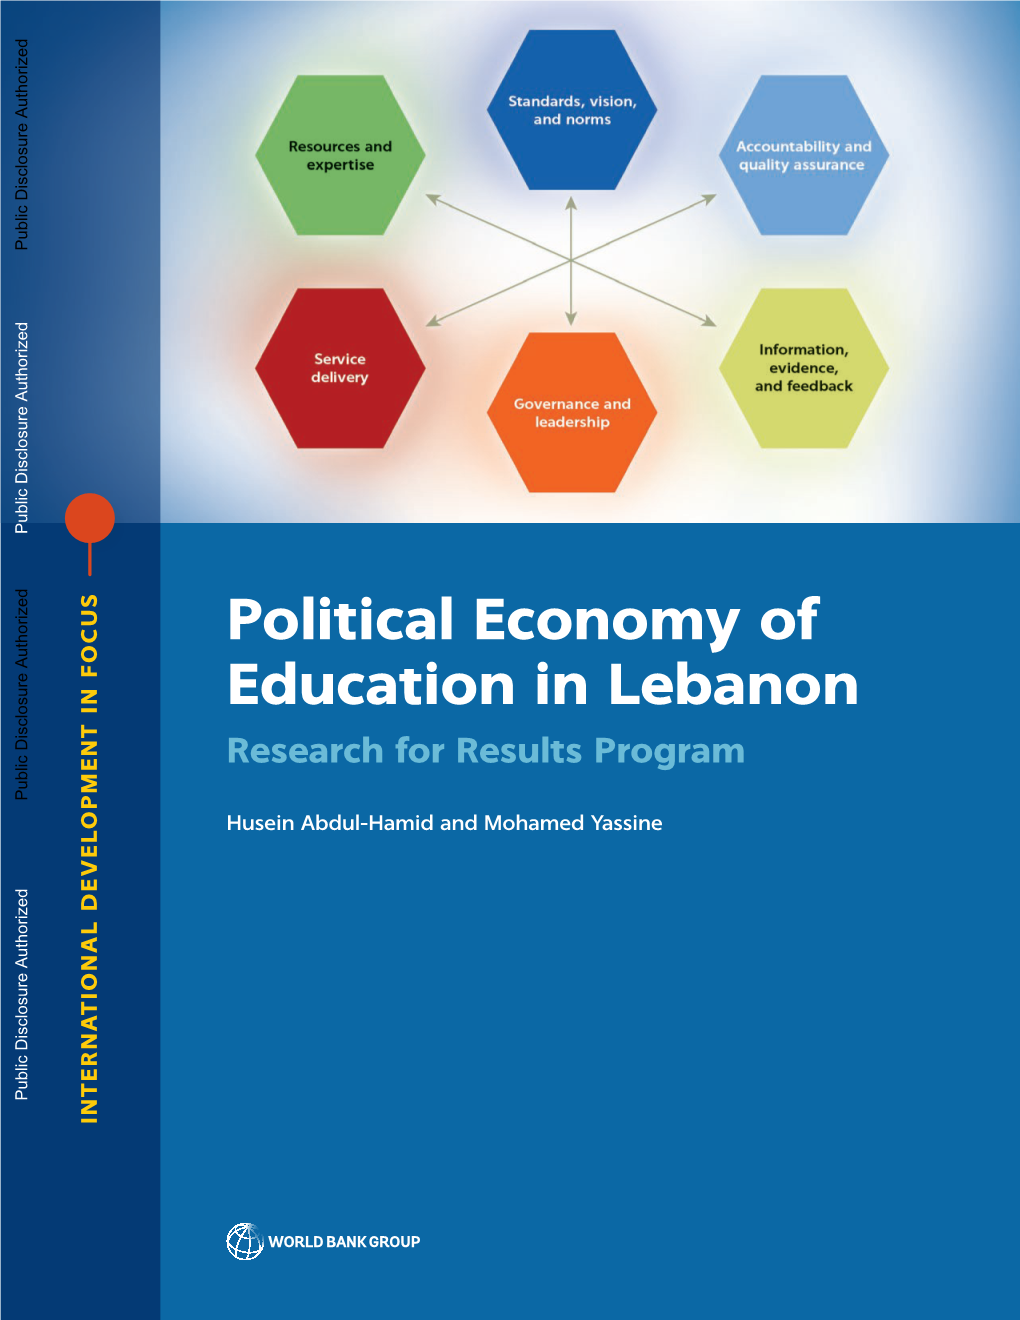 Political Economy of Education in Lebanon